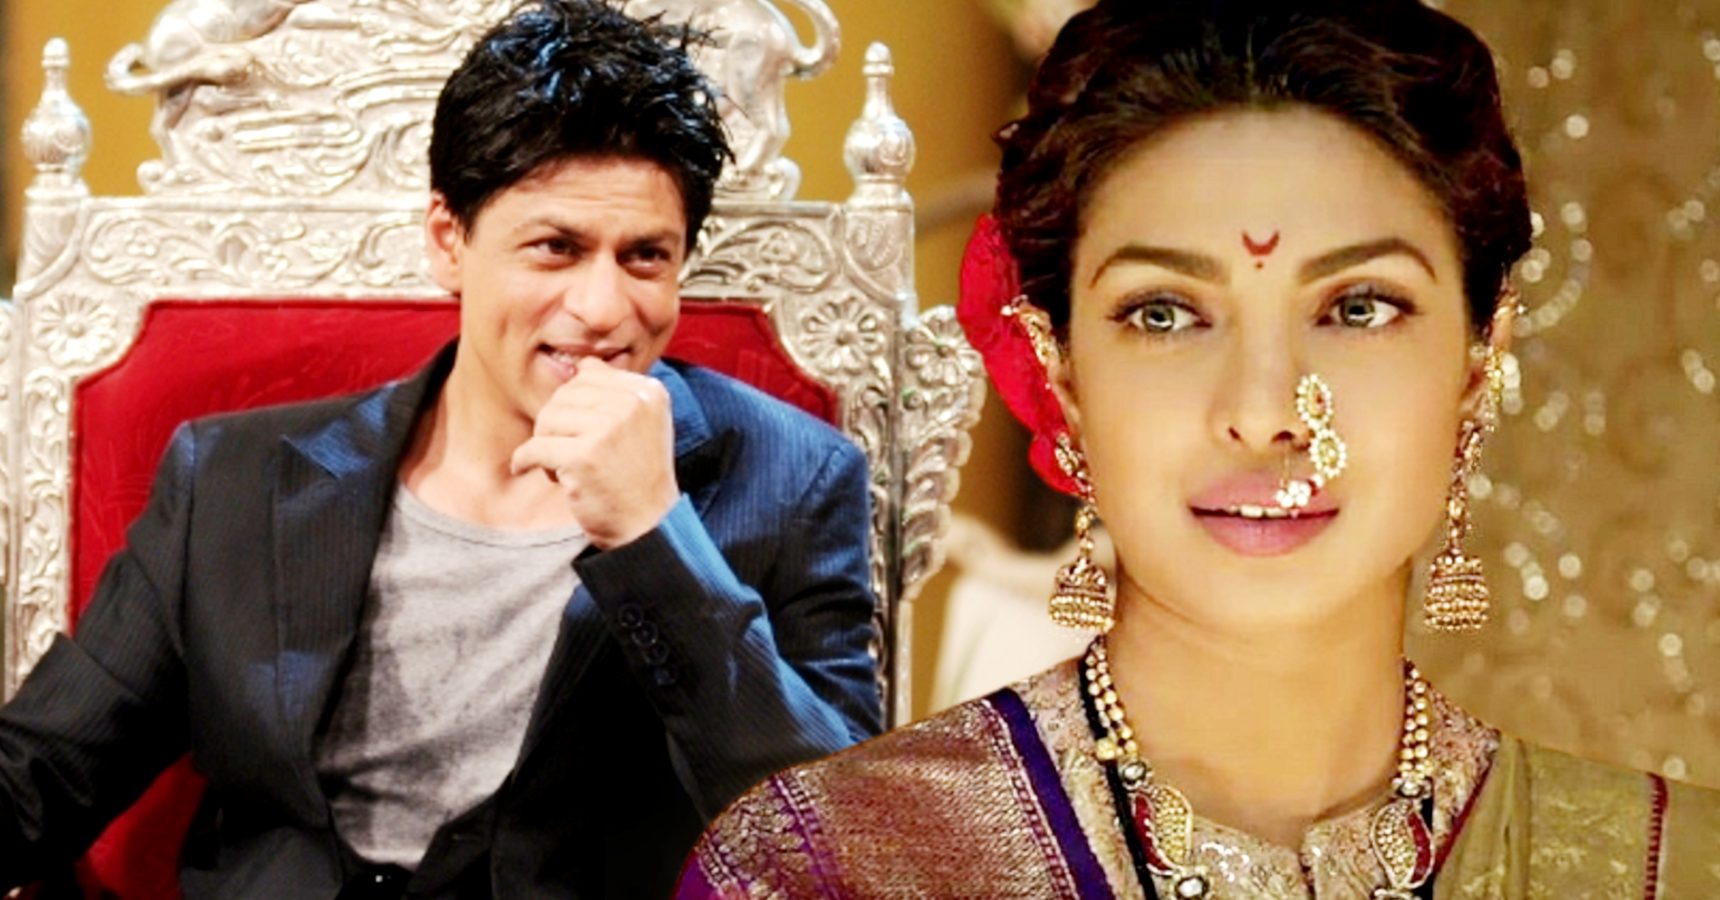 When Bollywood superstar Shah Rukh Khan asked Priyanka Chopra if she would marry him